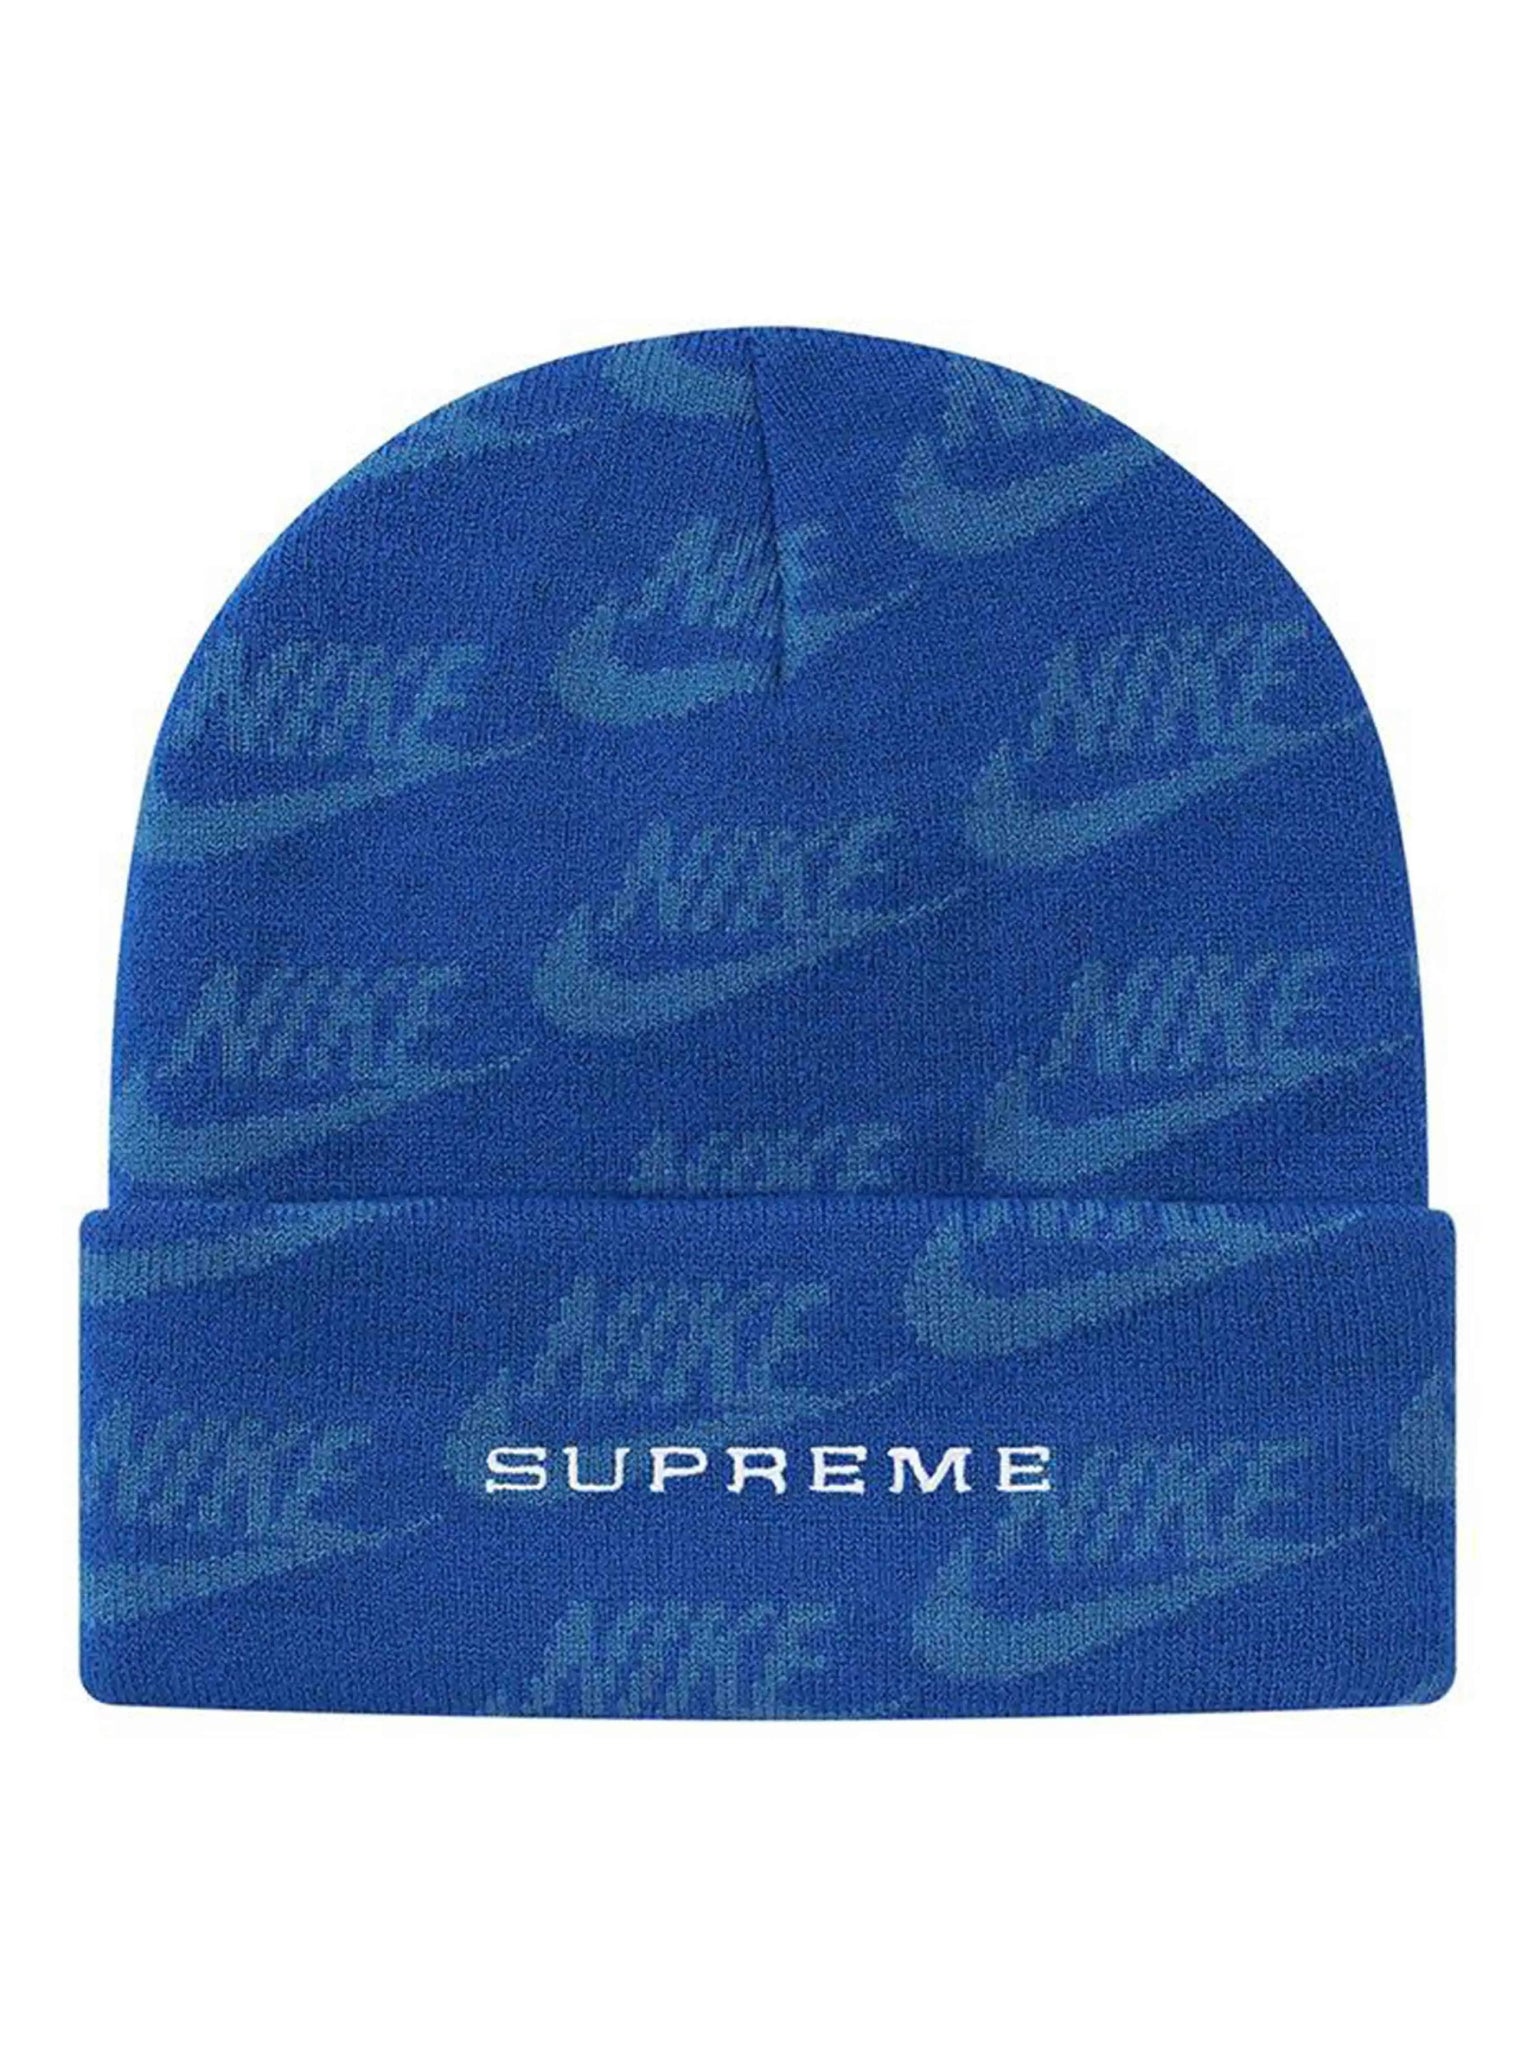 Supreme Nike Jacquard Logos Beanie Blue [SS21] Prior